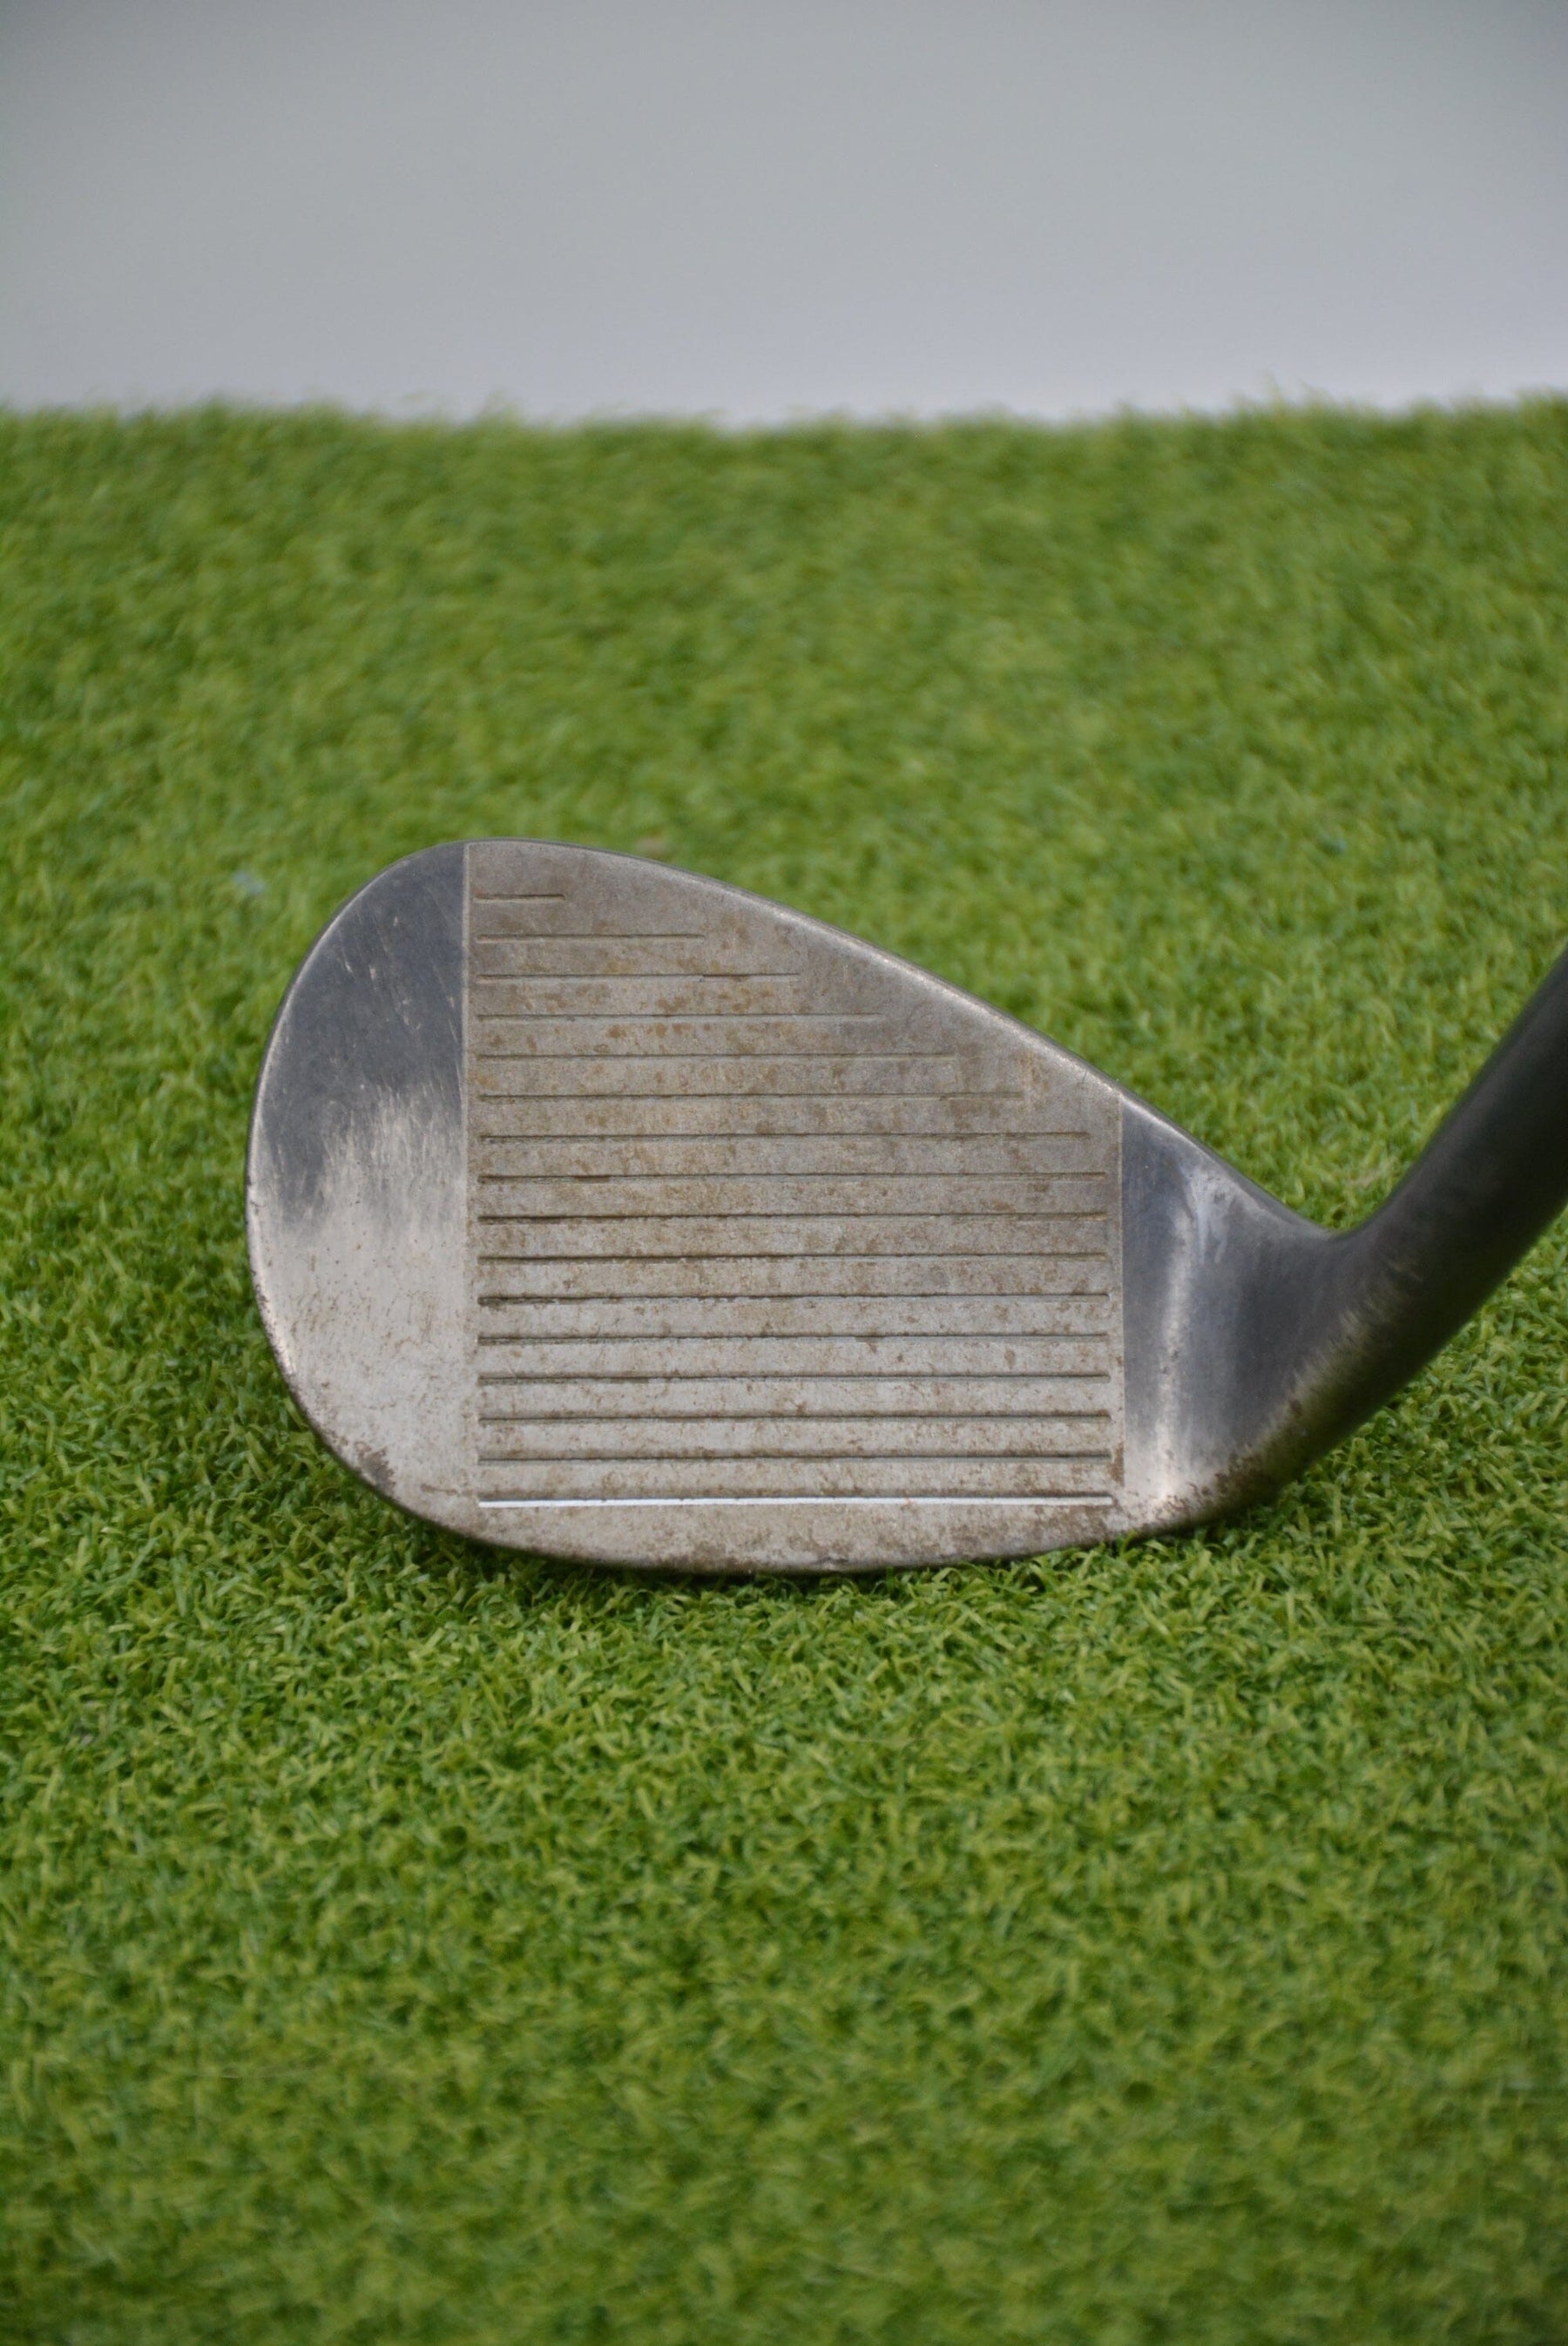 Tech Power Rusty Metal 56 Degree Wedge Wedge Flex Golf Clubs GolfRoots 